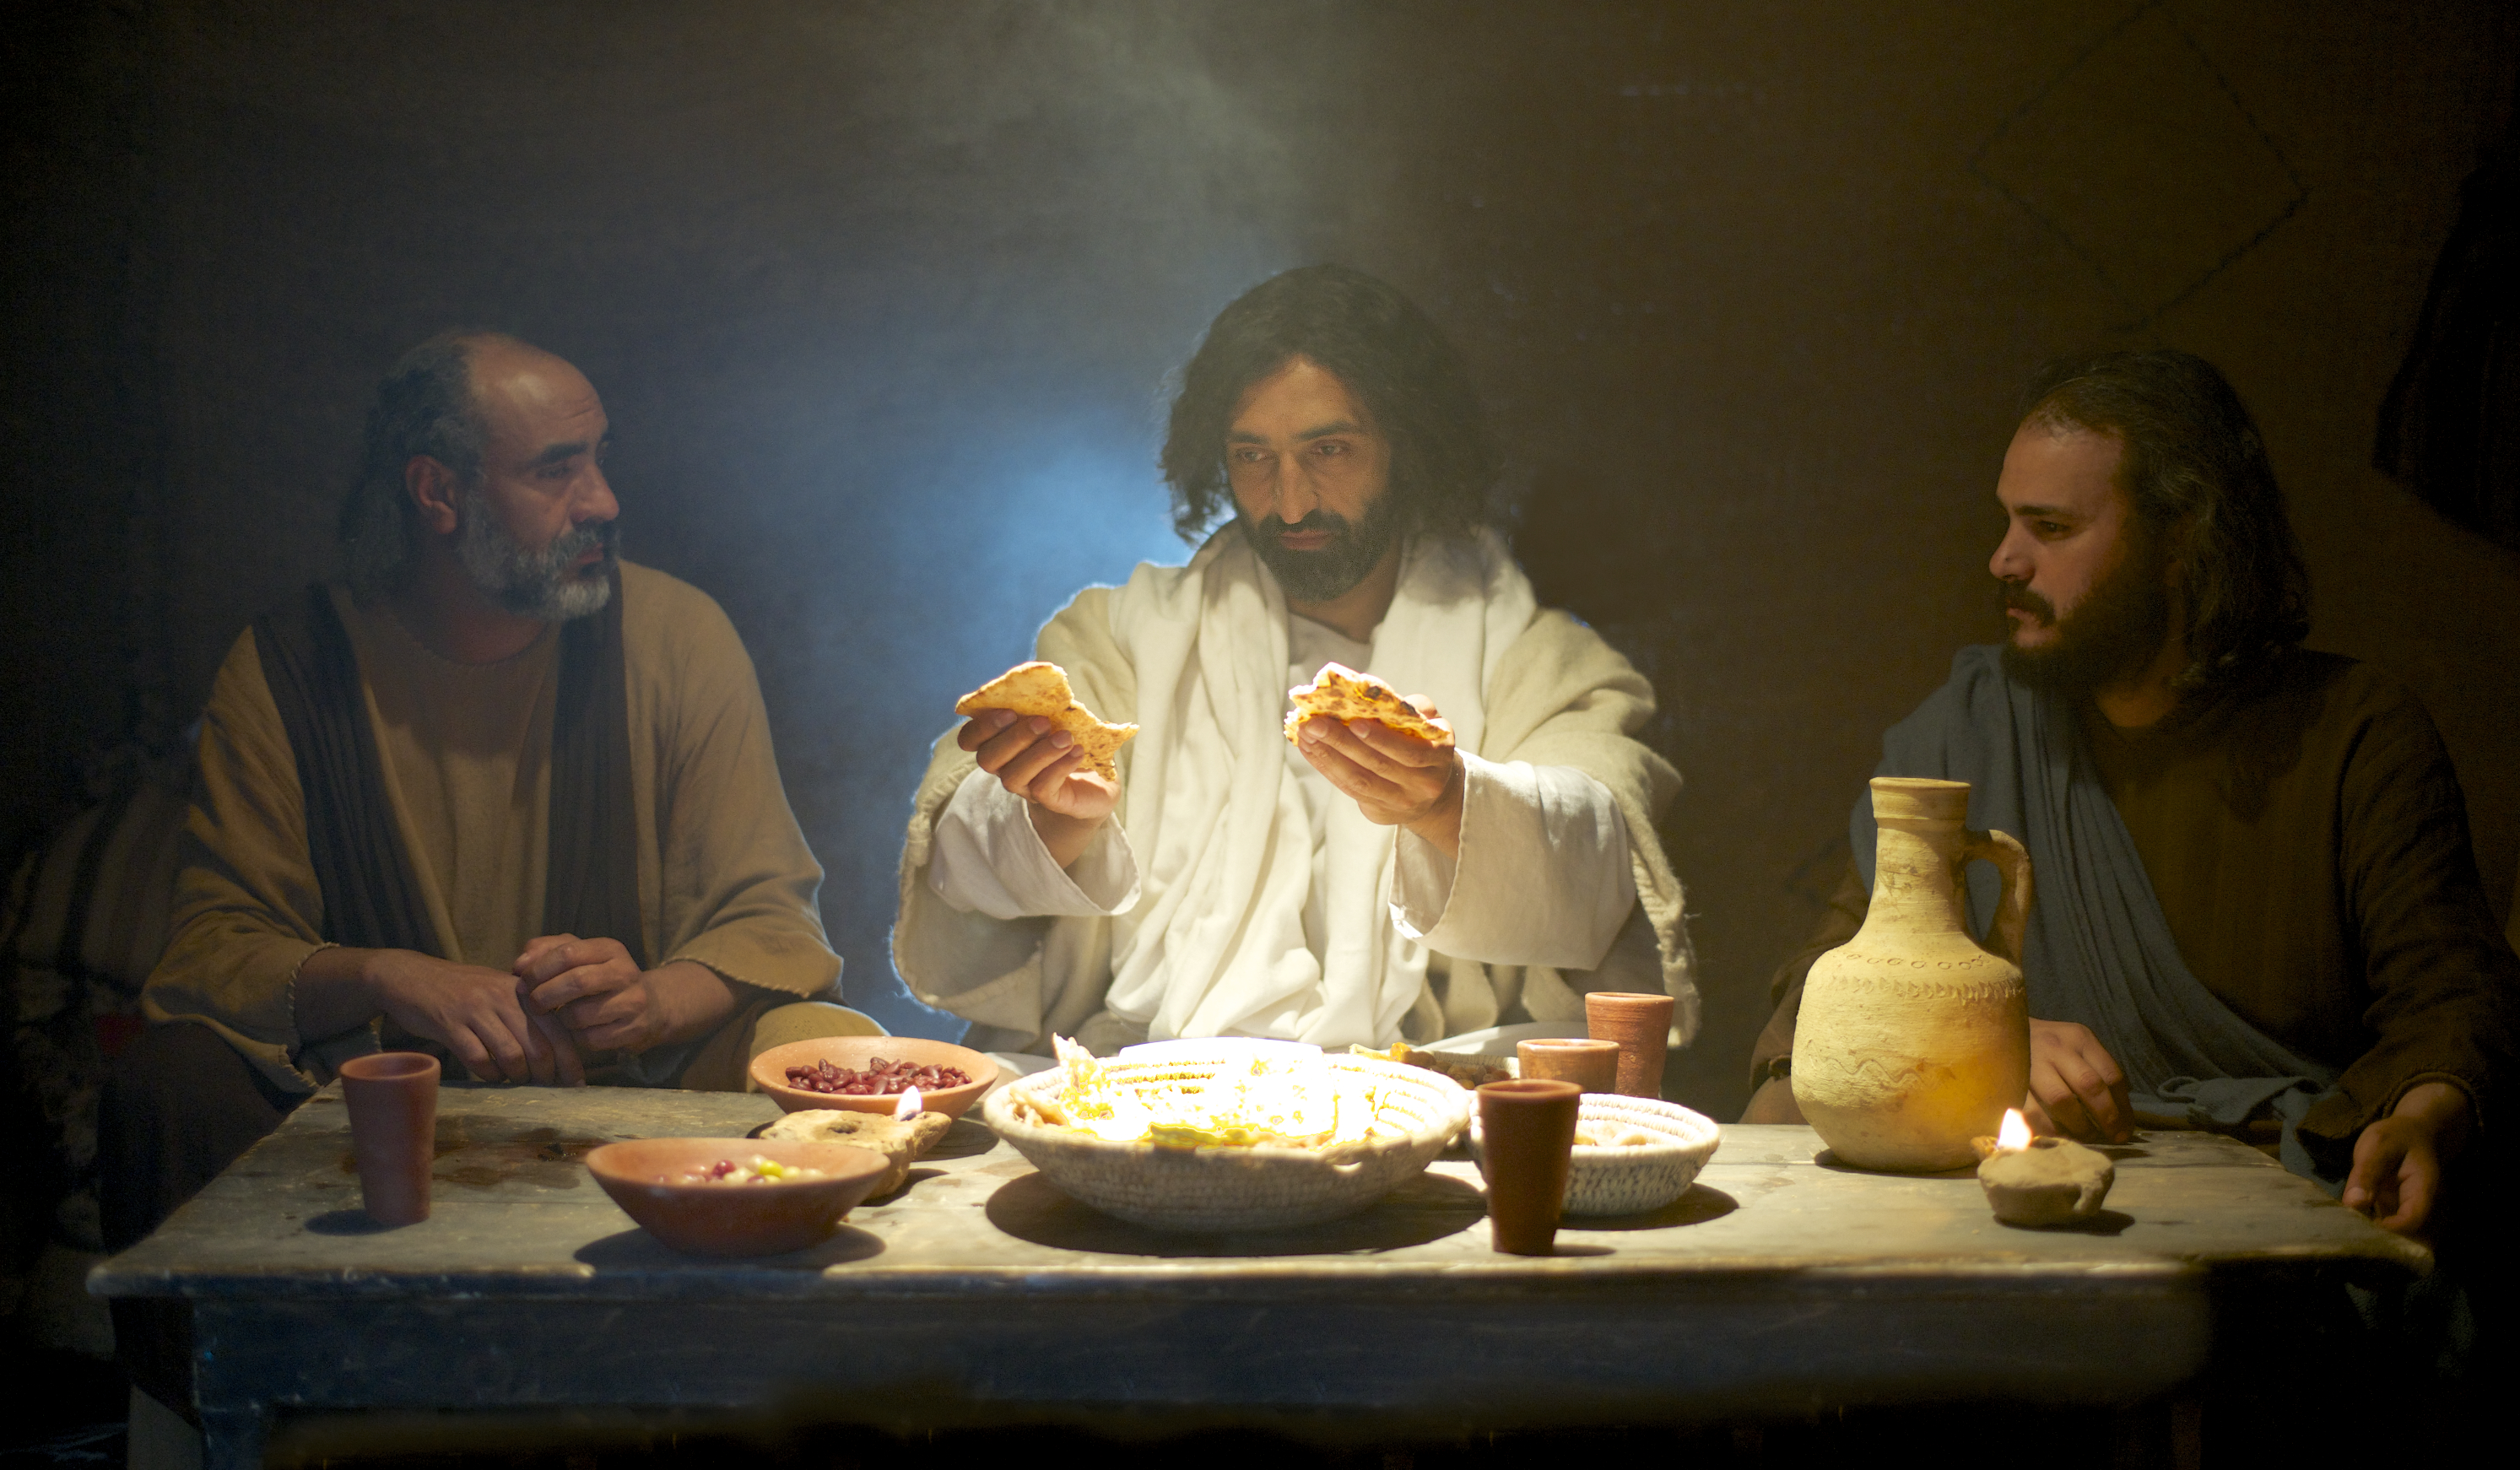 Jesus in The Gospel film series